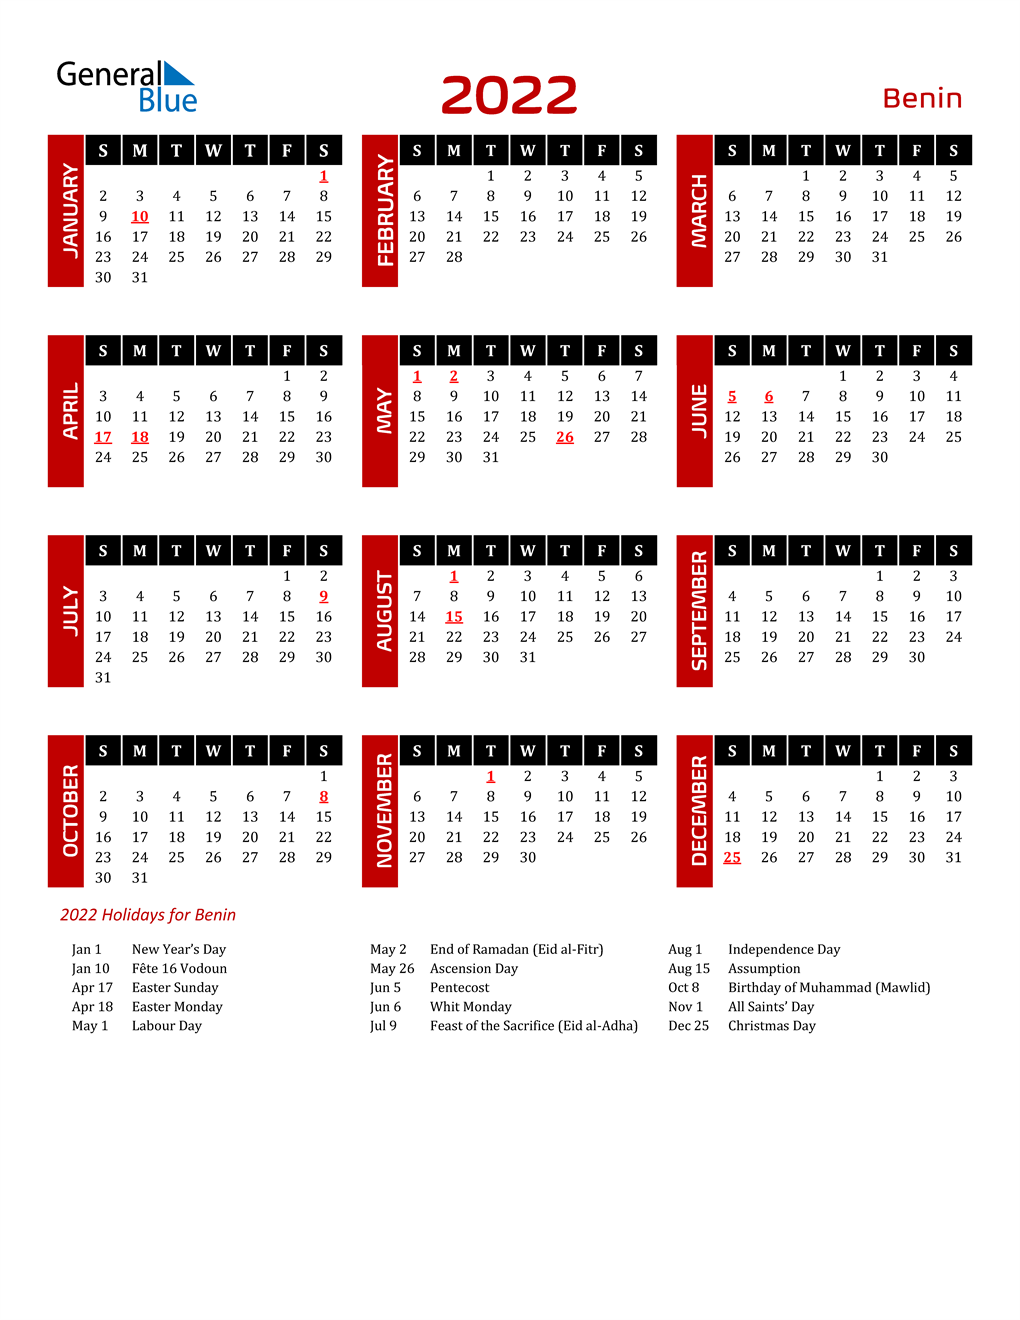 Market Schedule 2022 2022 Benin Calendar With Holidays